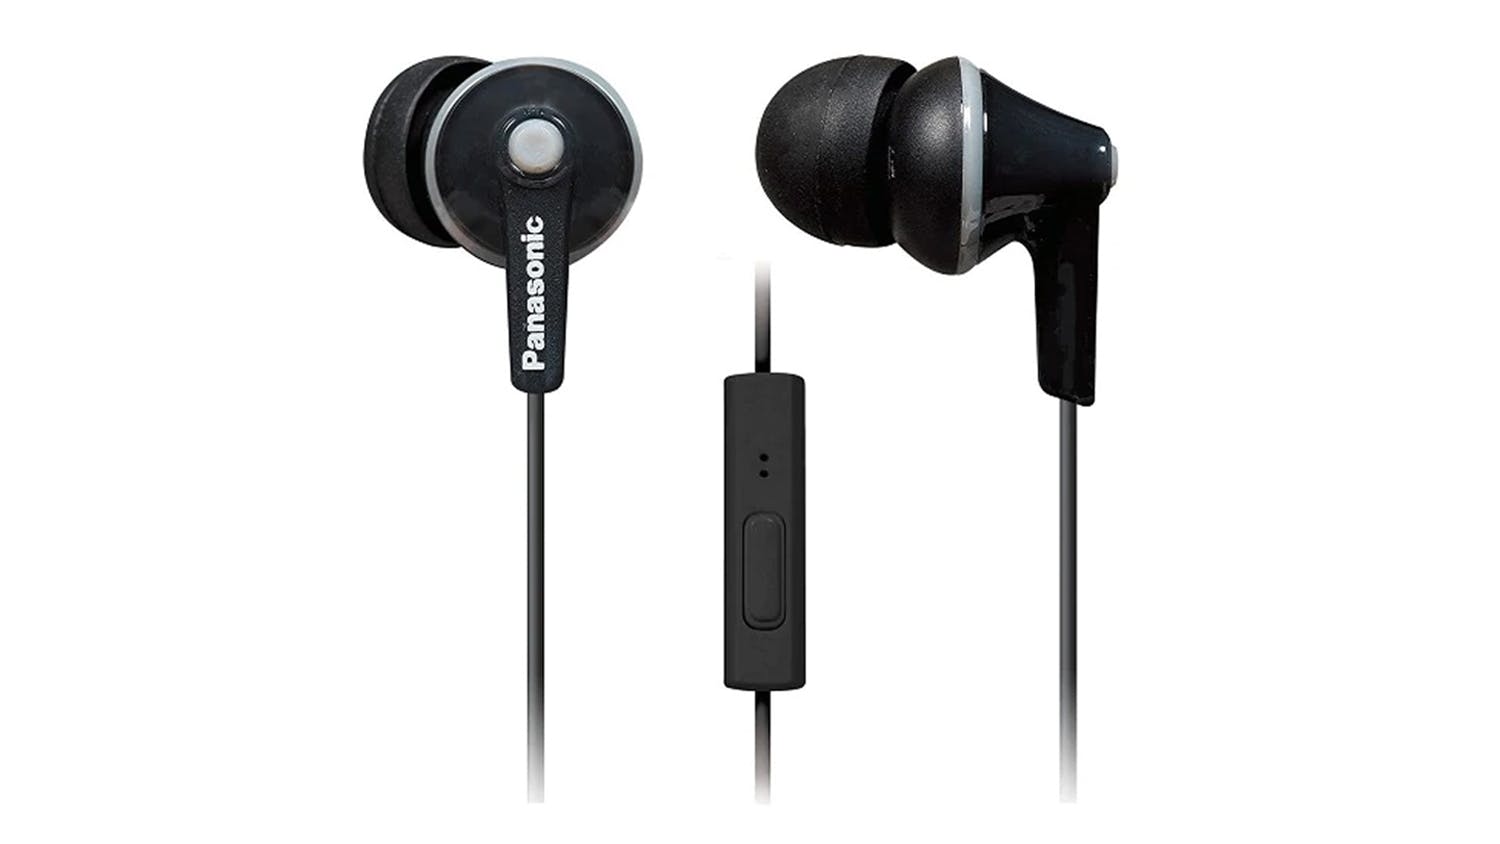 Zealand | In-Ear Headphones Panasonic Norman - RP-HJE125E Black Harvey New